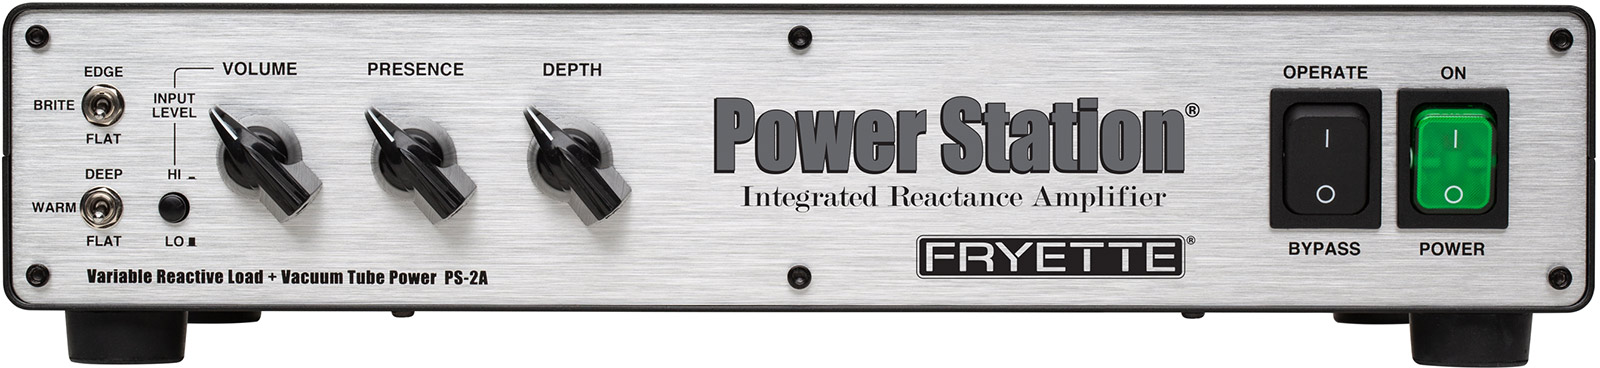 Fryette Power Station Ps2-a Reactive Load + Vacuum Tube Amp - Attenuator - Variation 1